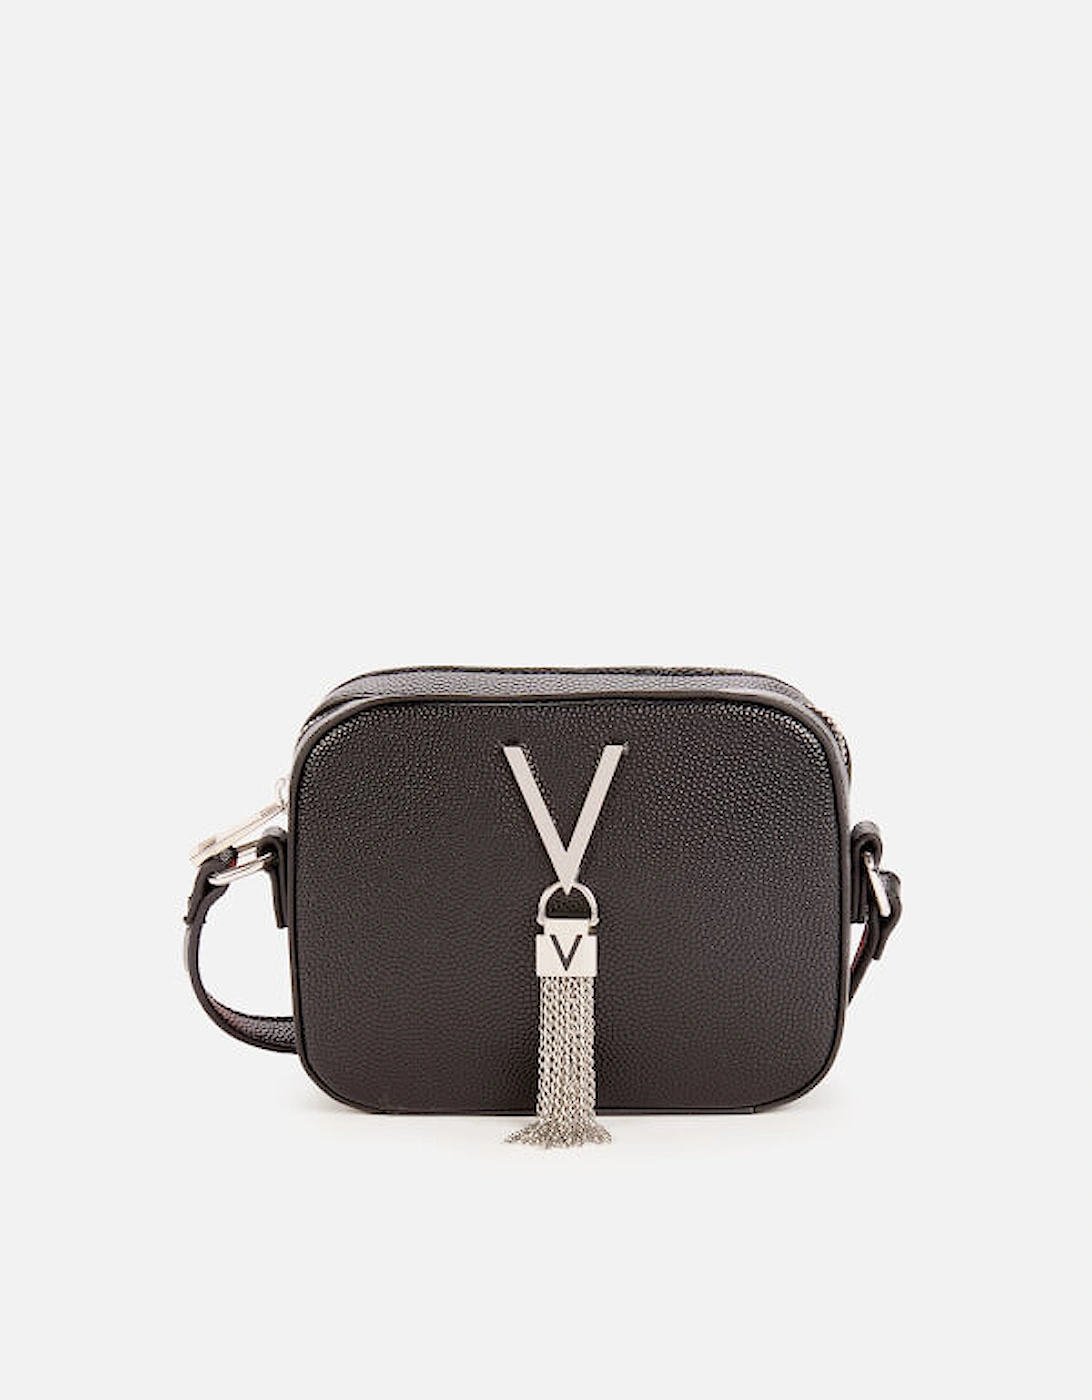 Home - Designer Handbags for Women - Designer Crossbody Bags - Women's Divina Camera Bag - Black - - Women's Divina Camera Bag - Black, 2 of 1